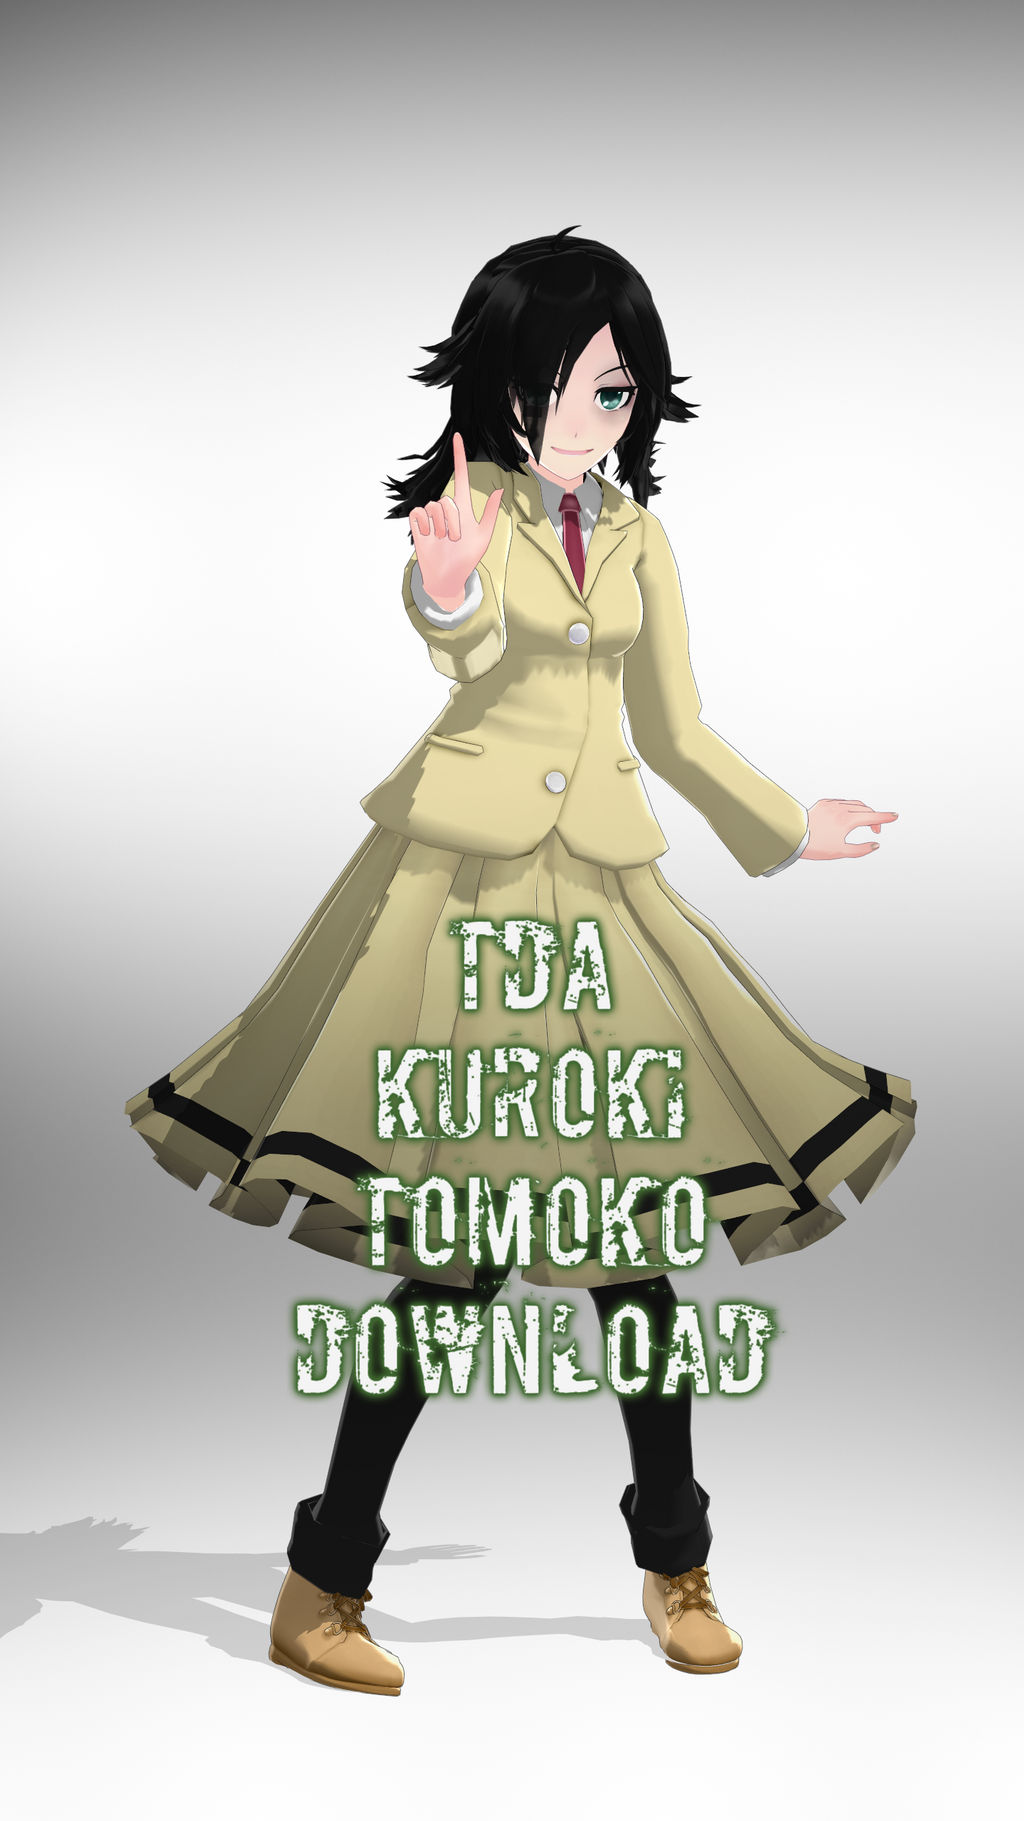 Tda Kuroki Tomoko Download  by Kodd84 on DeviantArt